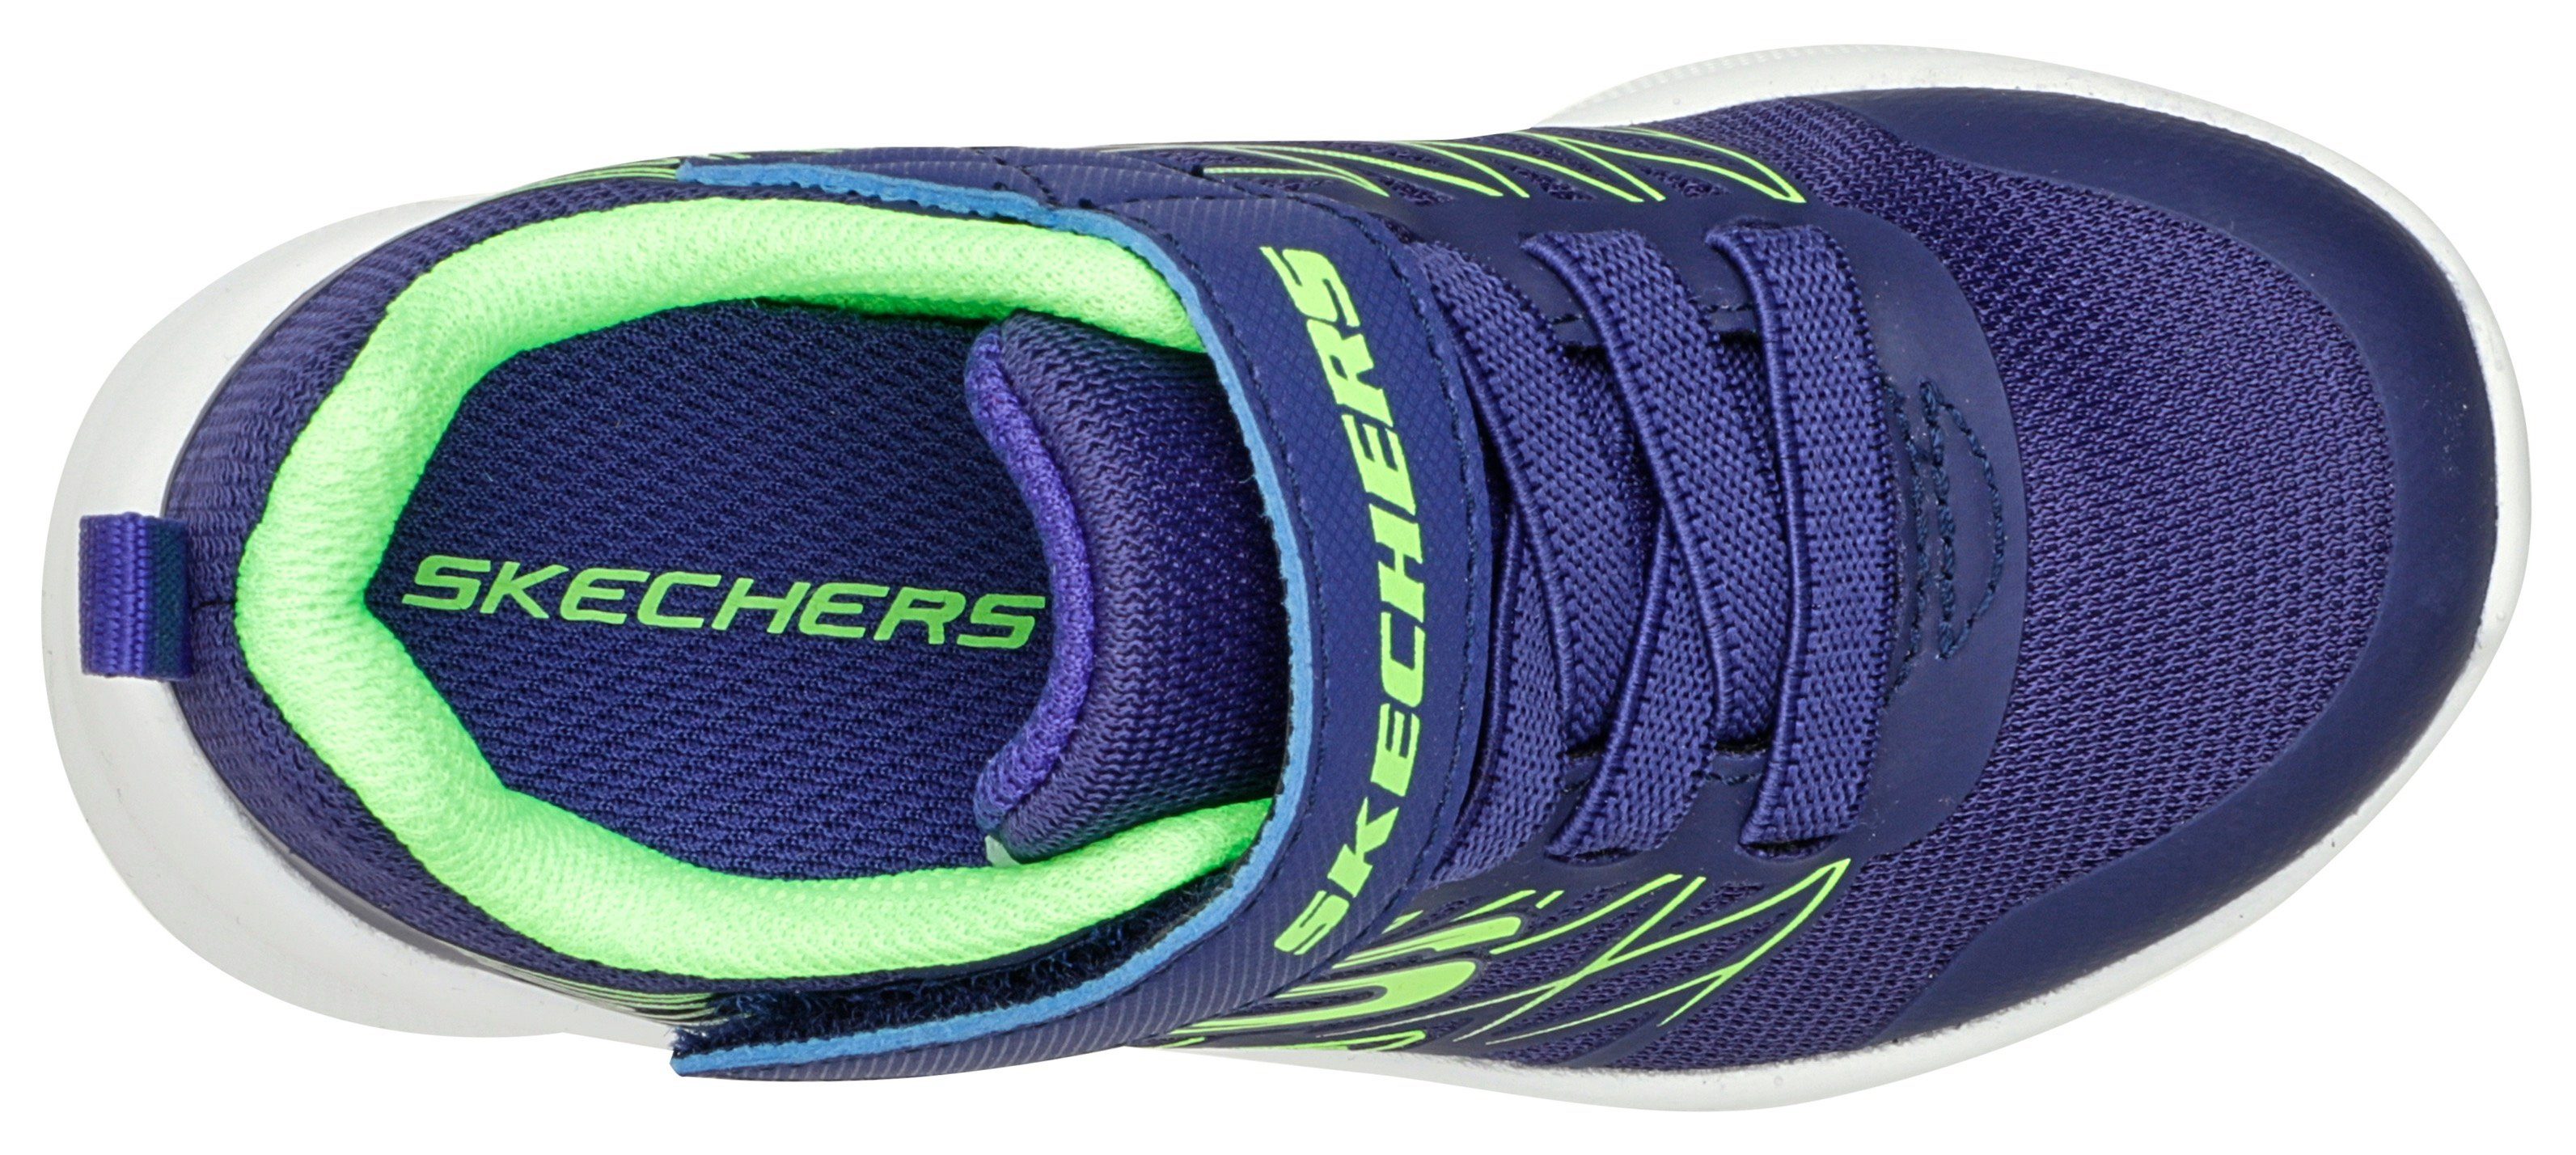 Skechers Kids MICROSPEC TEXLOR Sneaker Laufsohle mit leichter